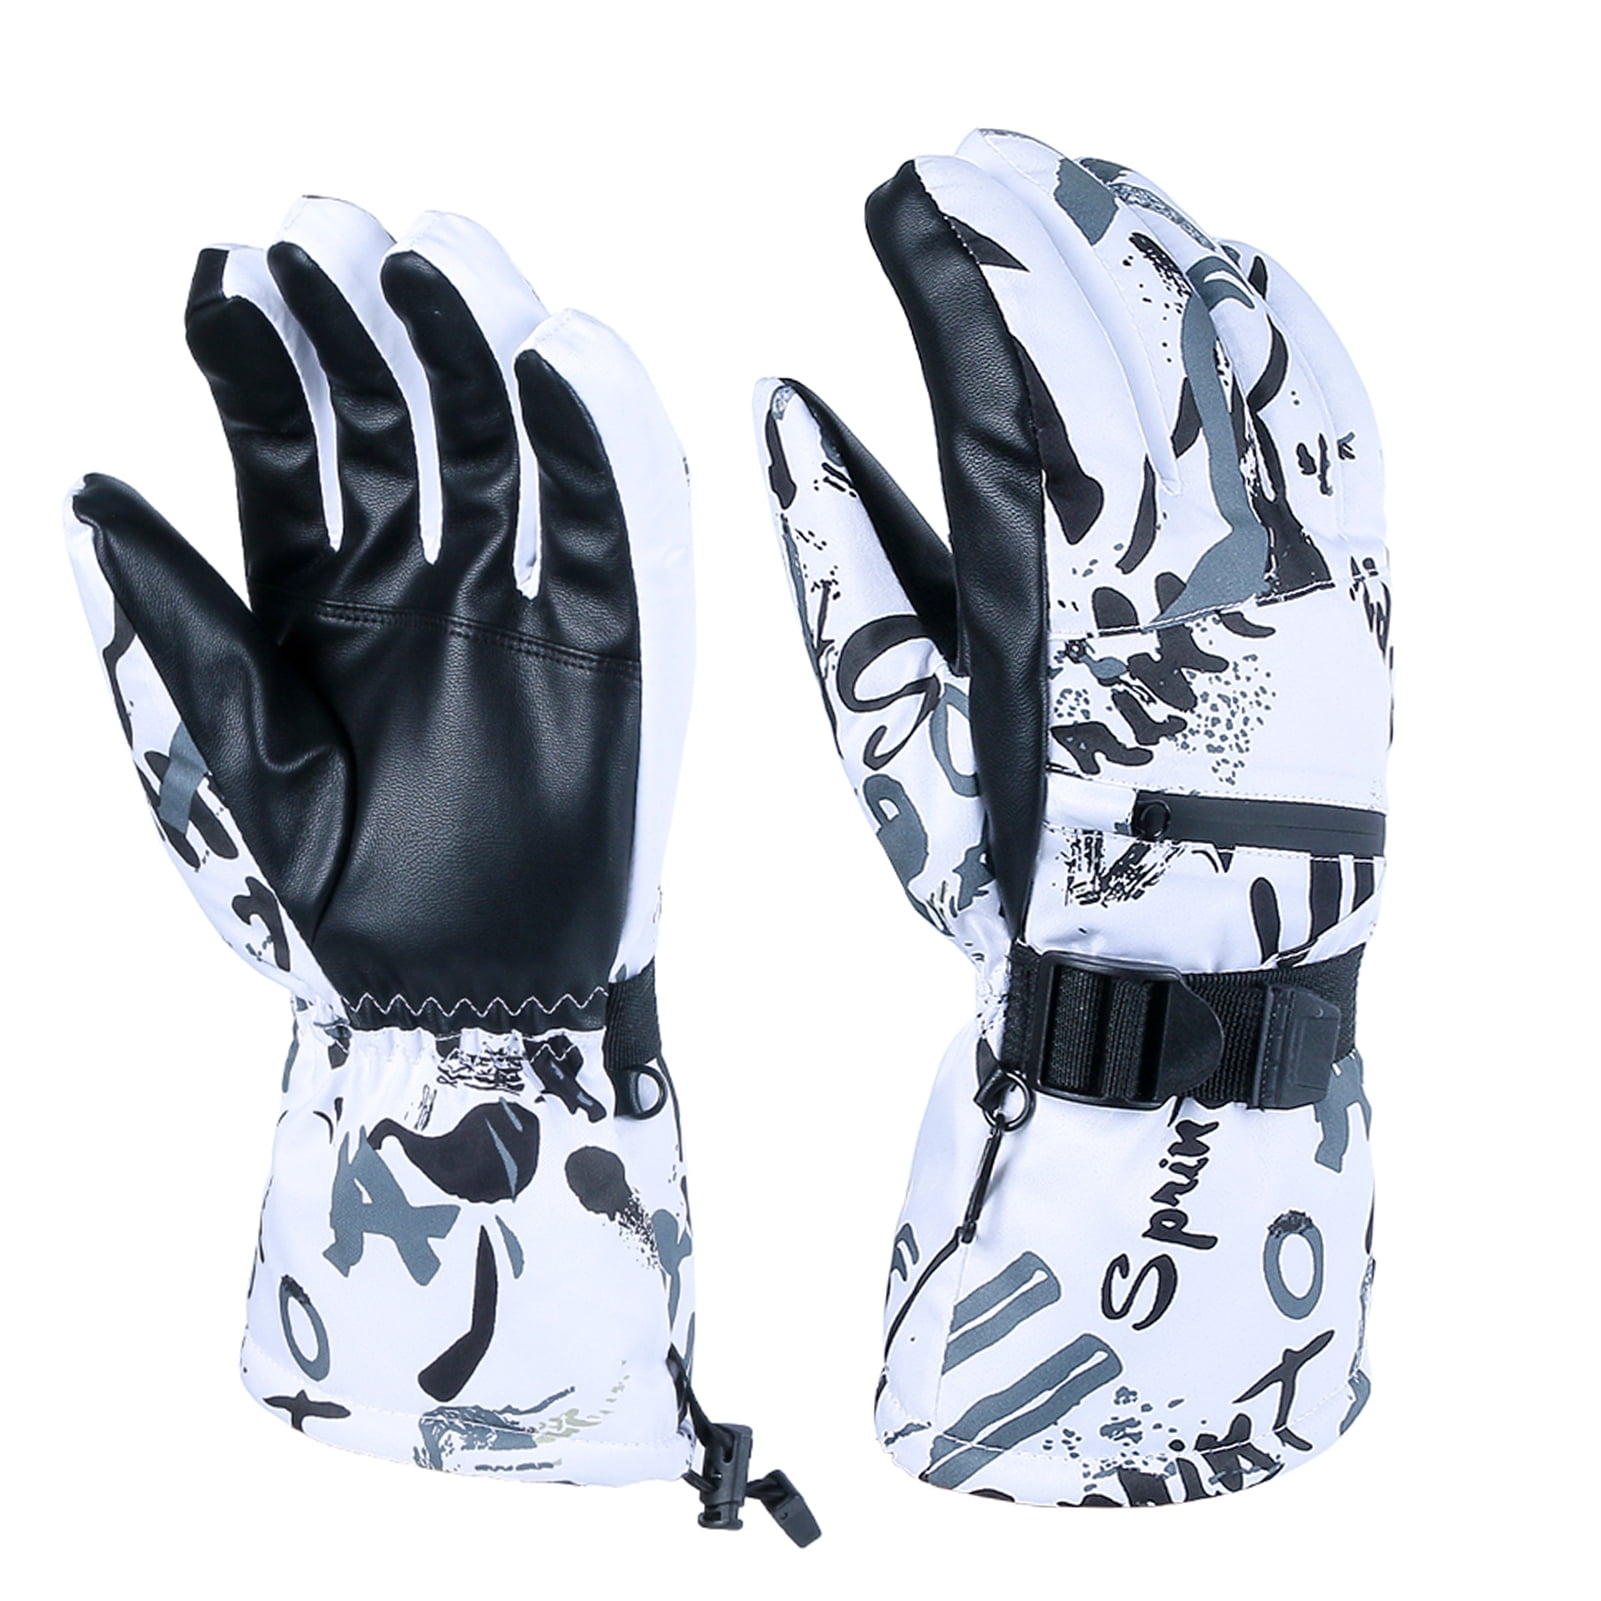 10? Waterproof Winter Ski Gloves Touch Screen Warm Mittens Snow Snowboarding 